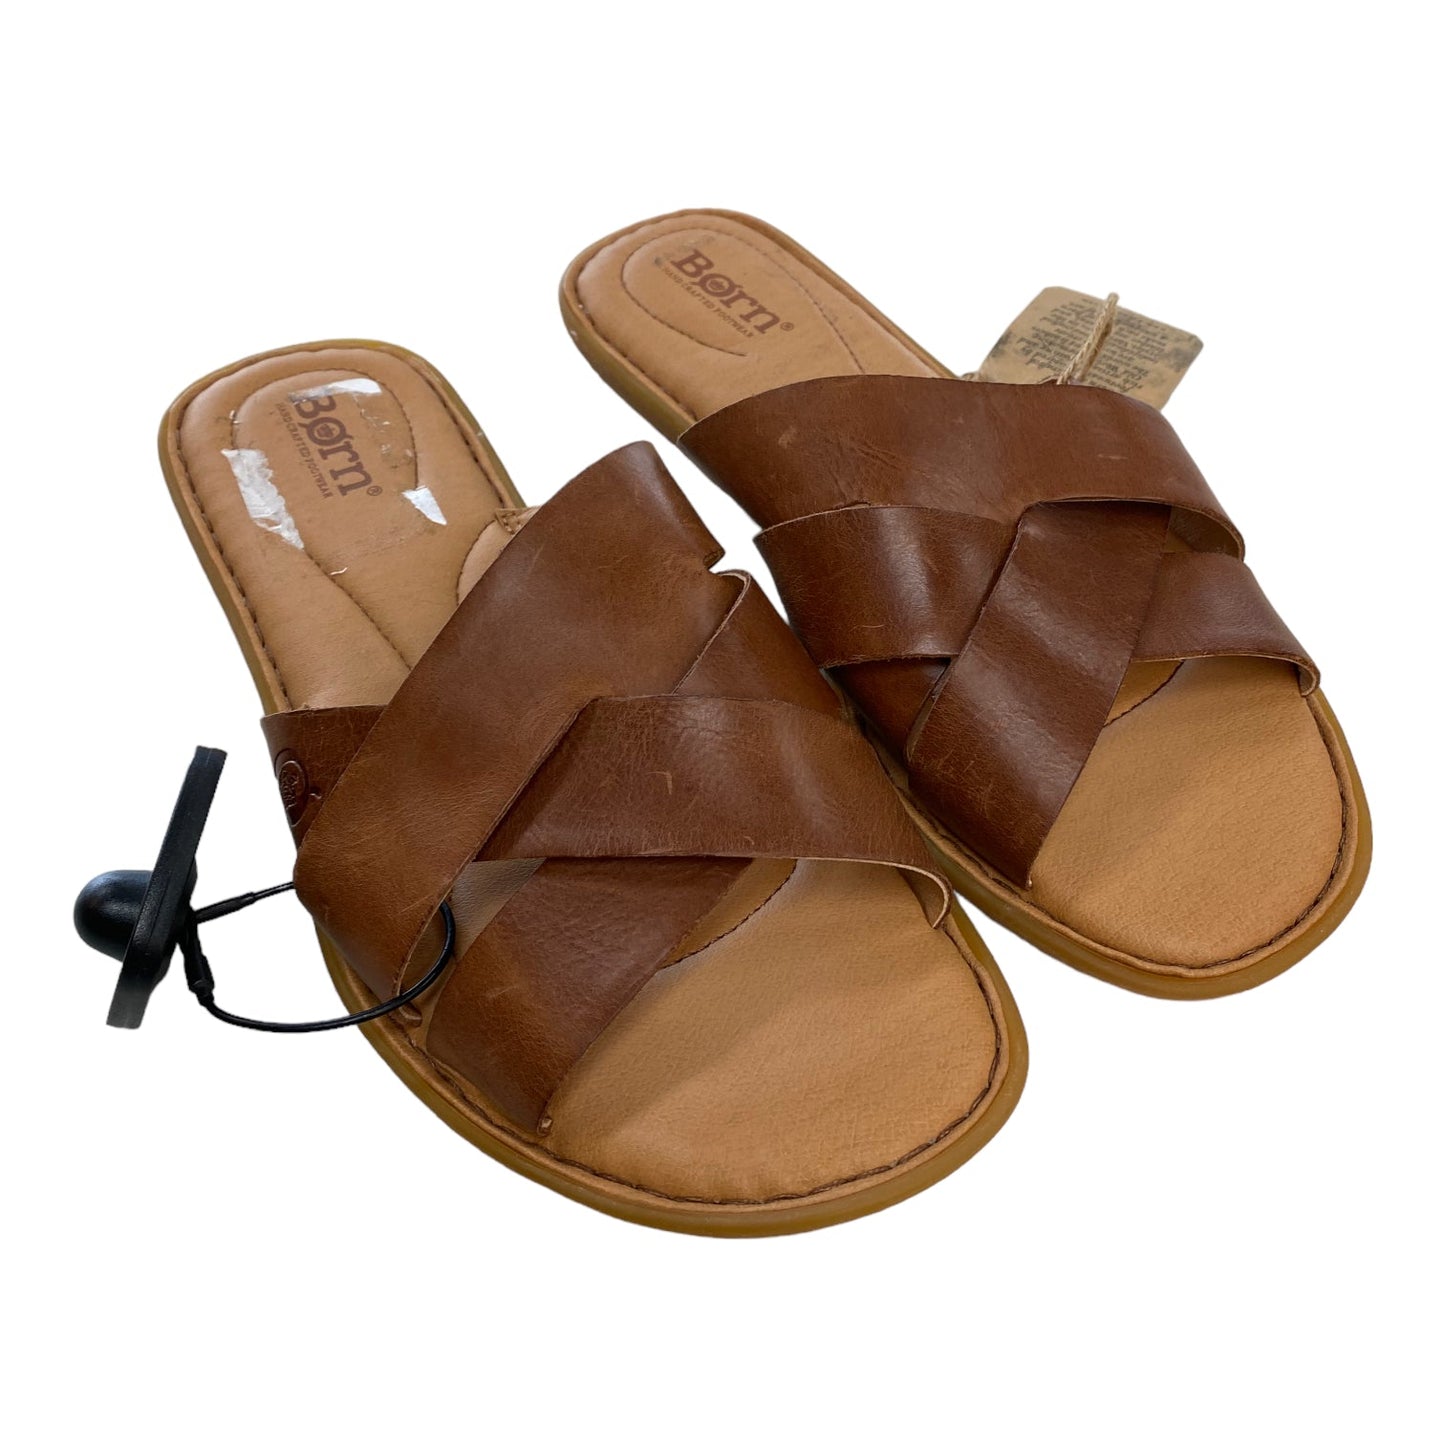 Tan Sandals Flats Born, Size 8